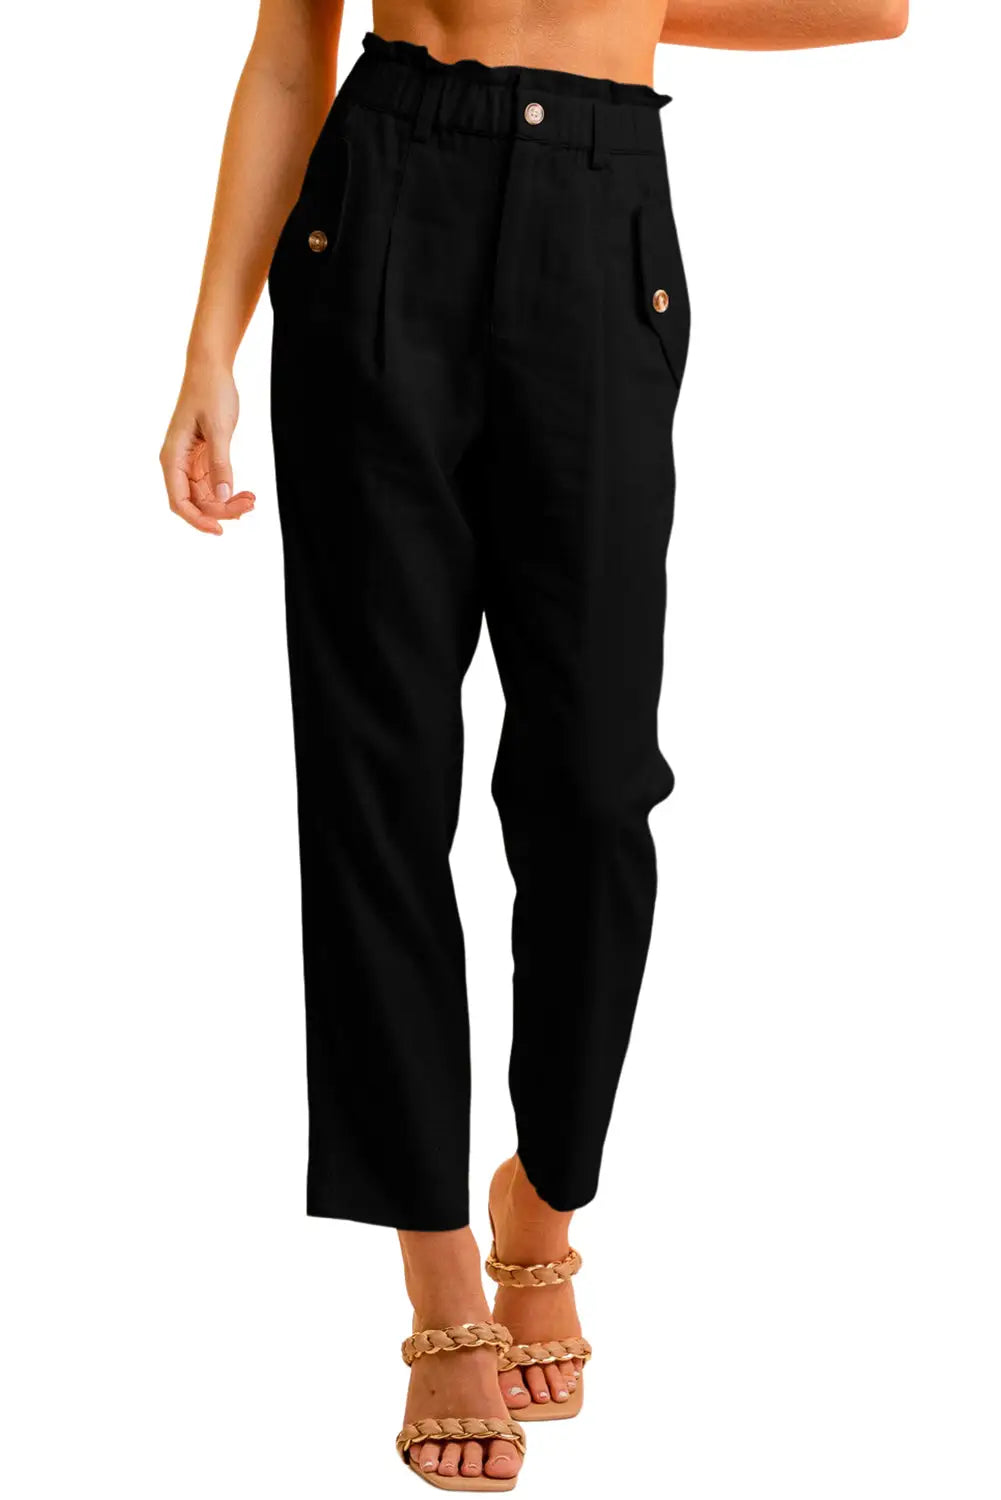 Brown button flap pocket high waisted linen pants - straight